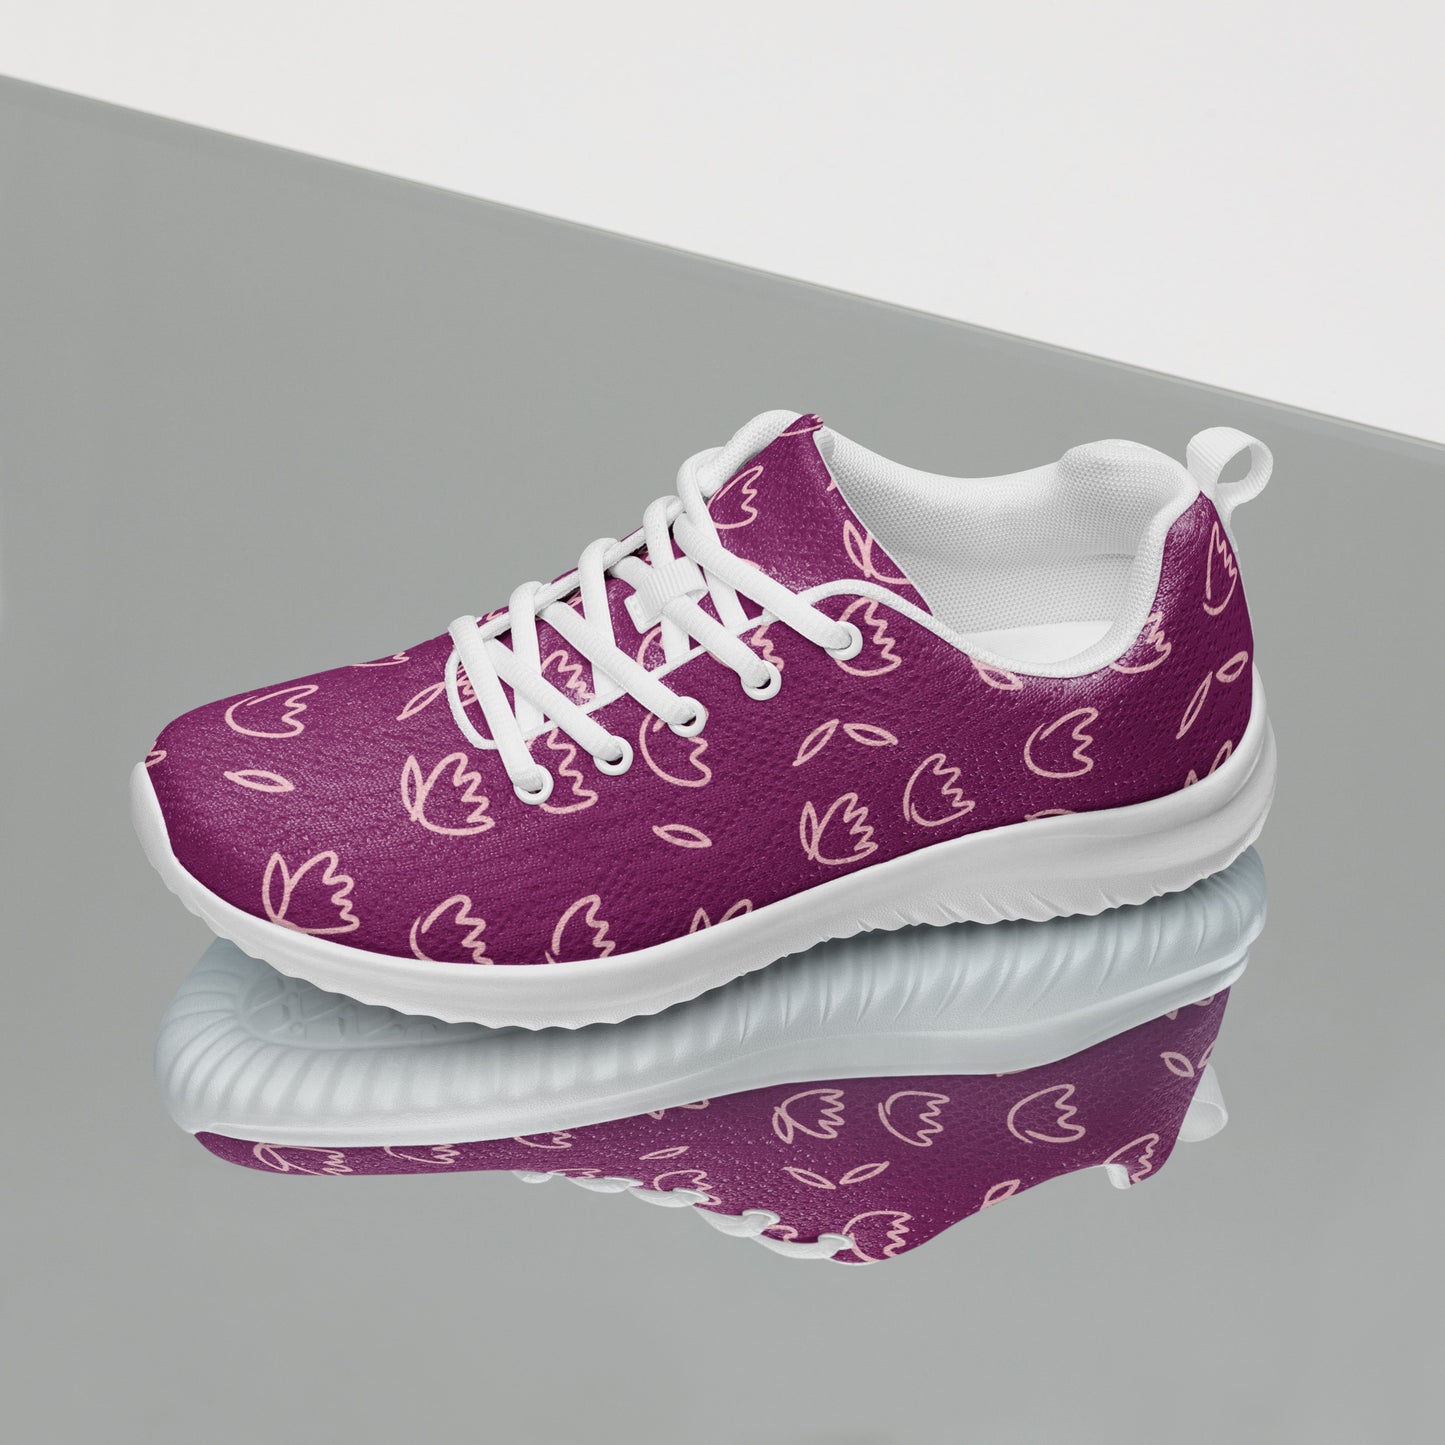 Women’s athletic shoes